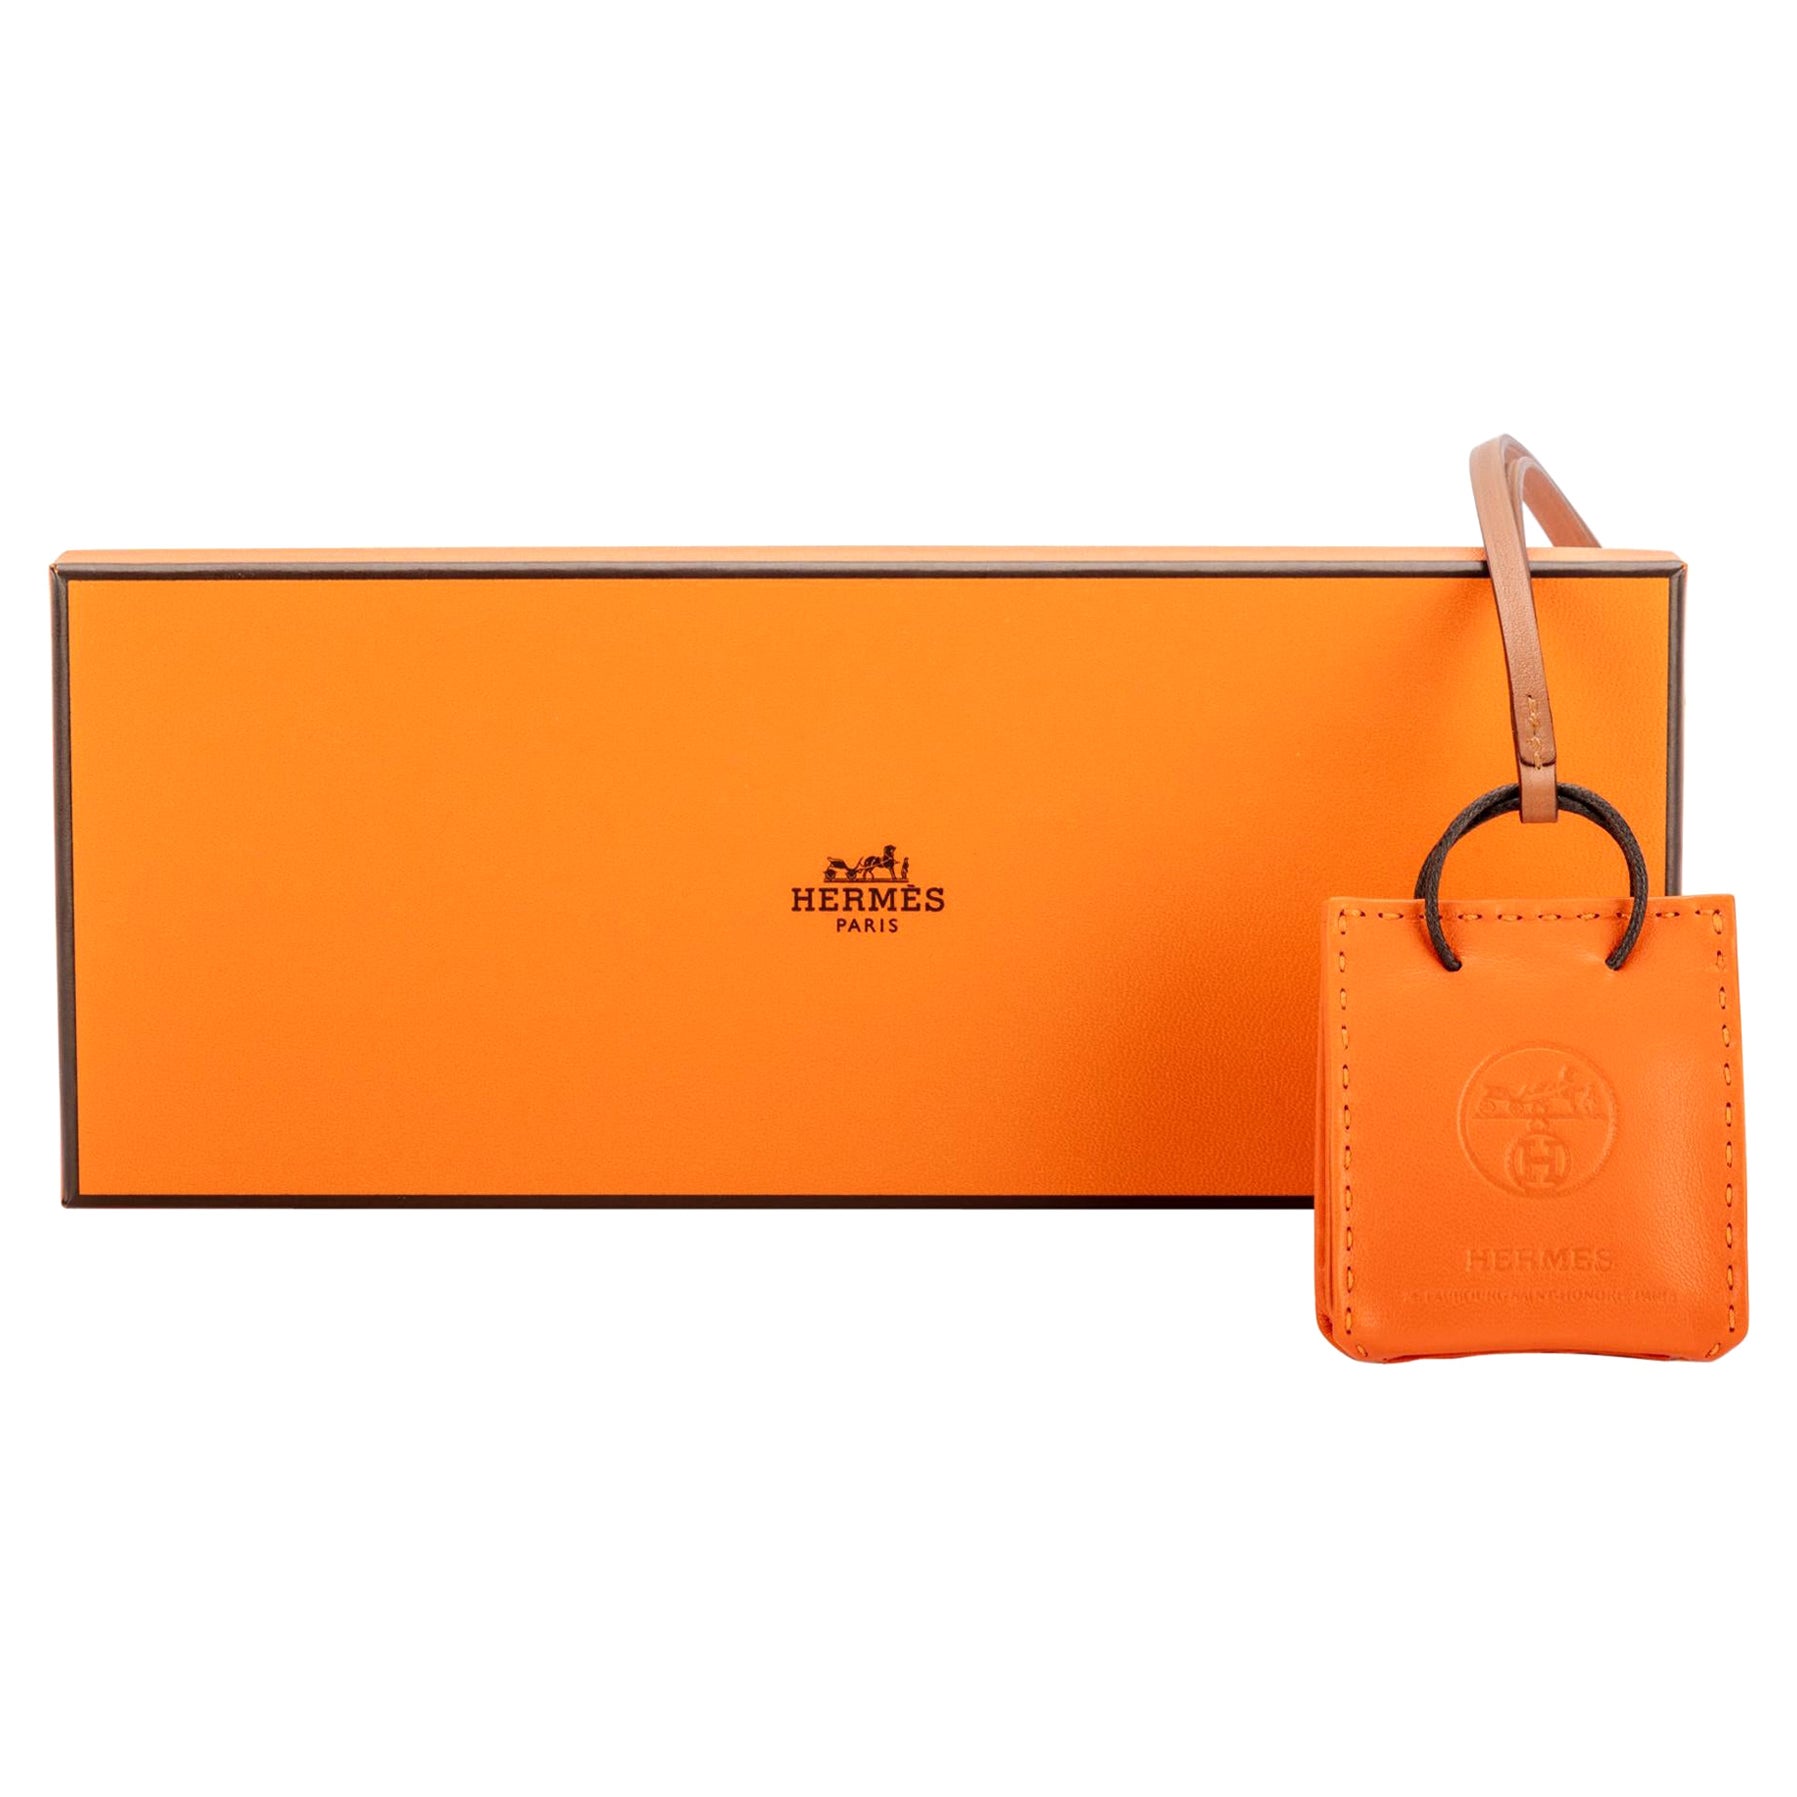 New in Box Hermes Rare Orange Bag Charm